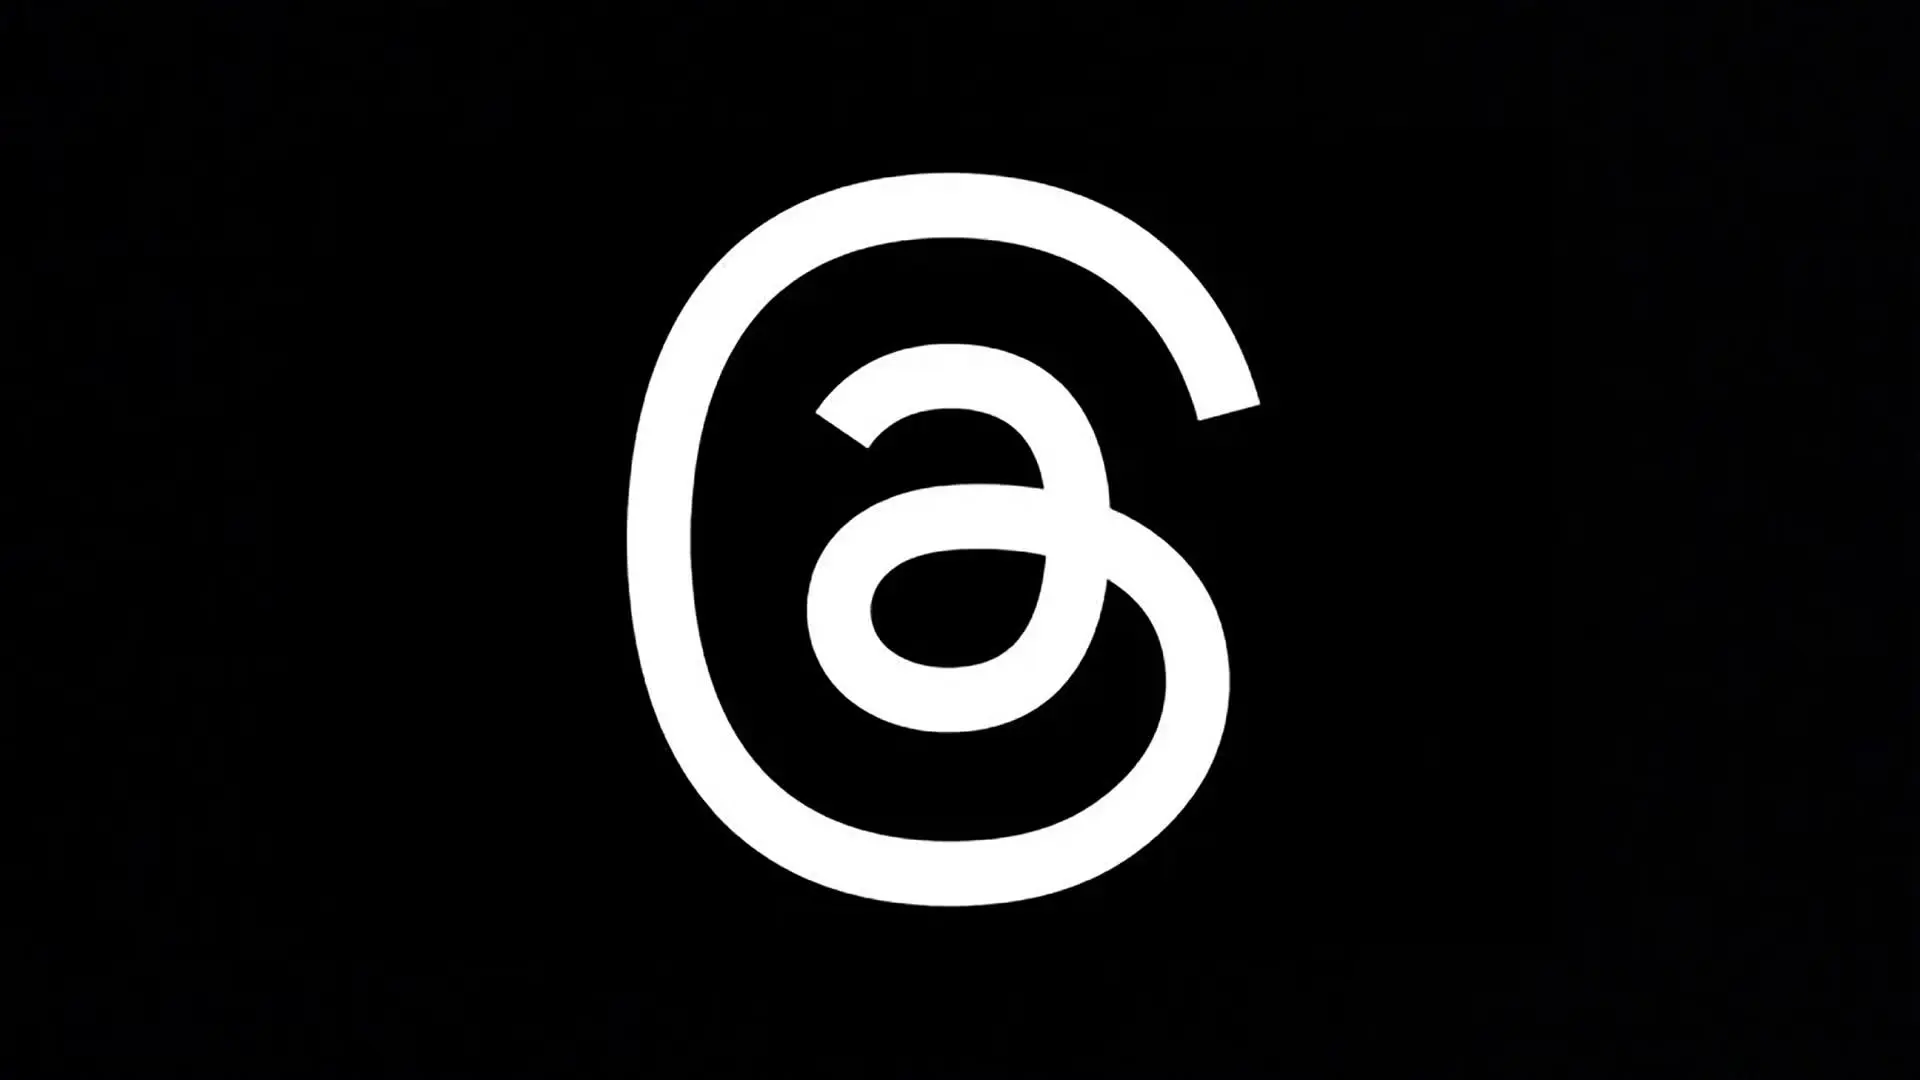 Threads app logo